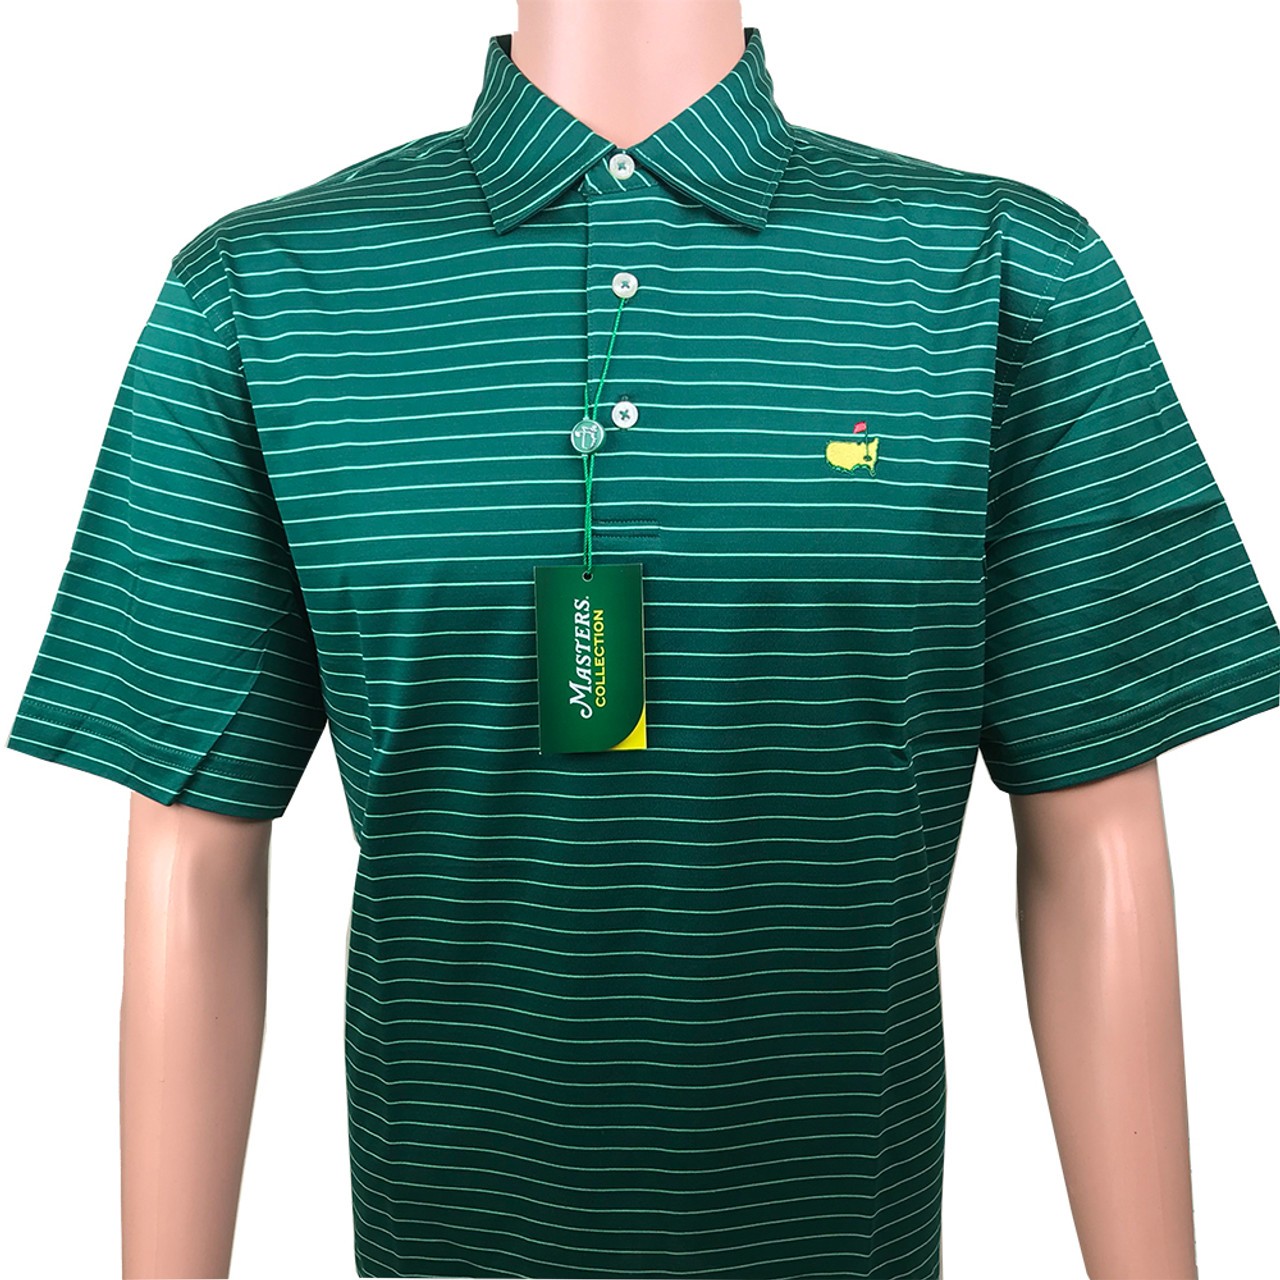 Masters Jersey Evergreen & Light Green Thin Striped Golf Shirt